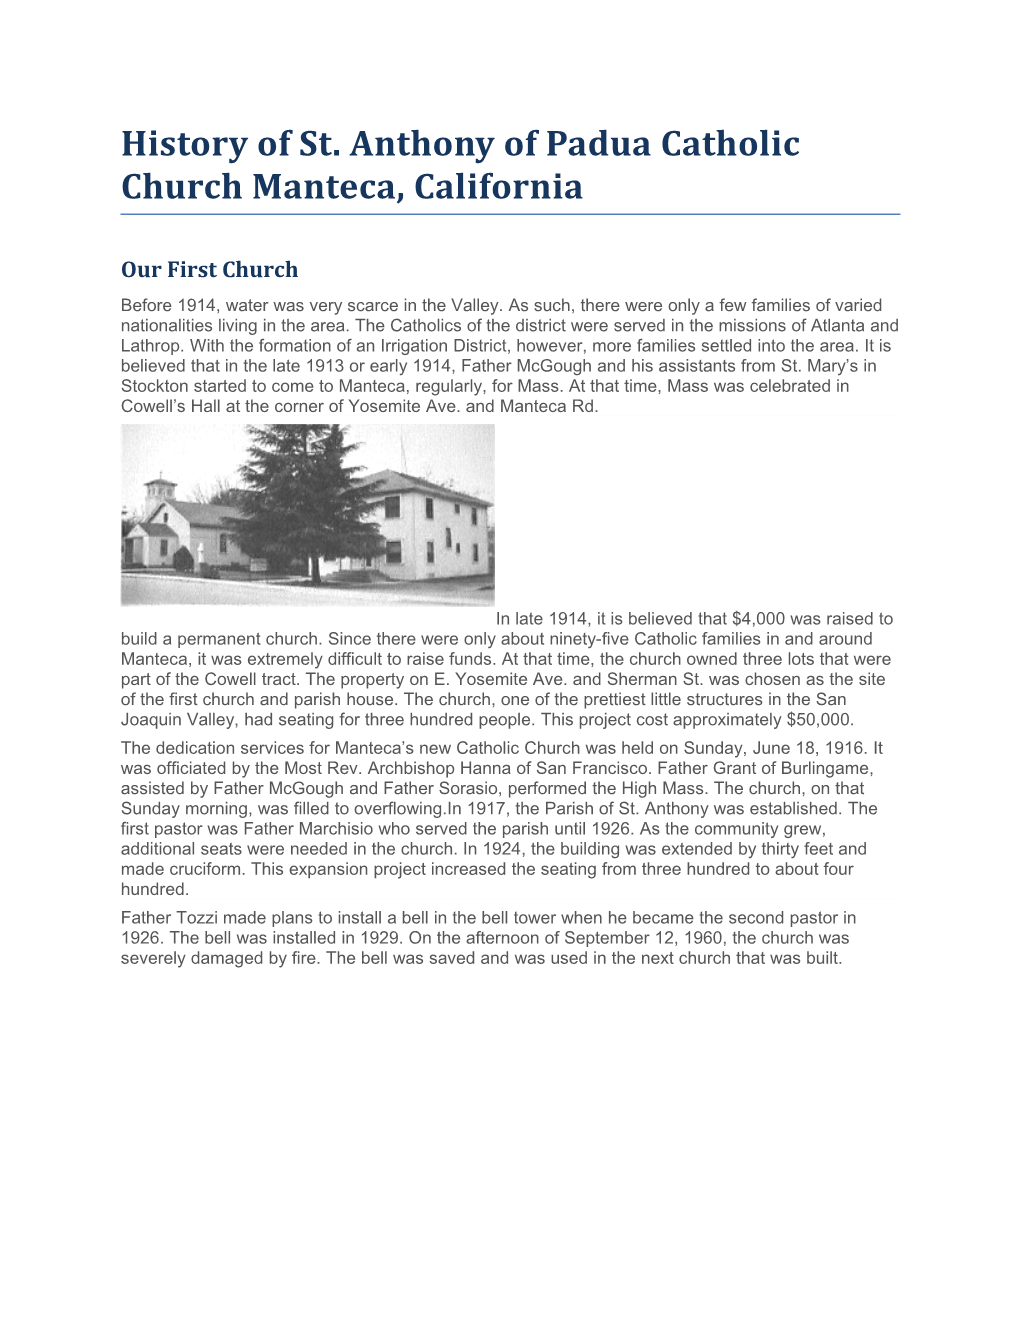 History of St. Anthony of Padua Catholic Church Manteca, California